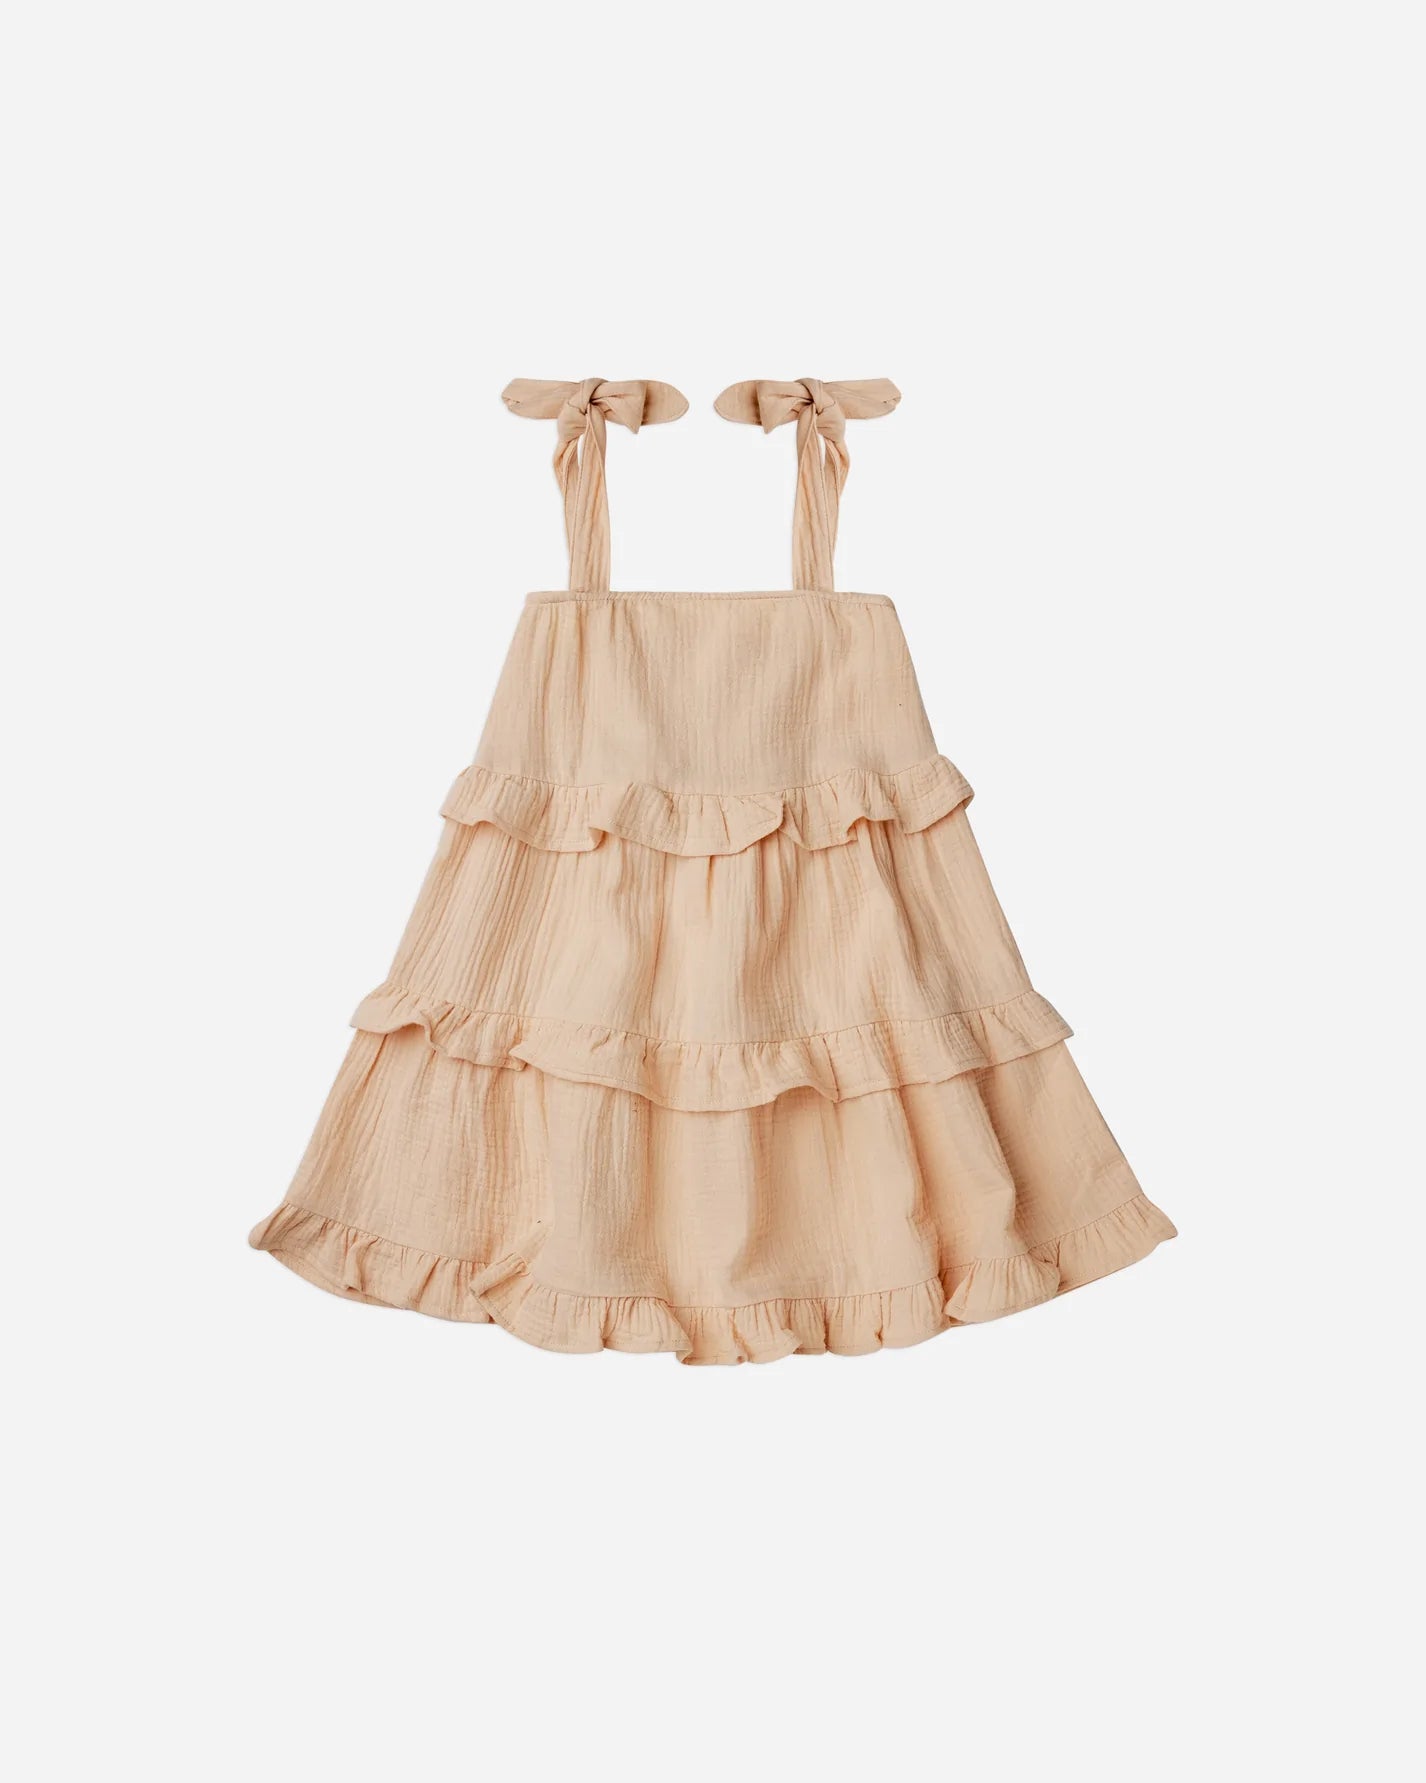 Ruffled Swing Dress in Shell  - Doodlebug's Children's Boutique